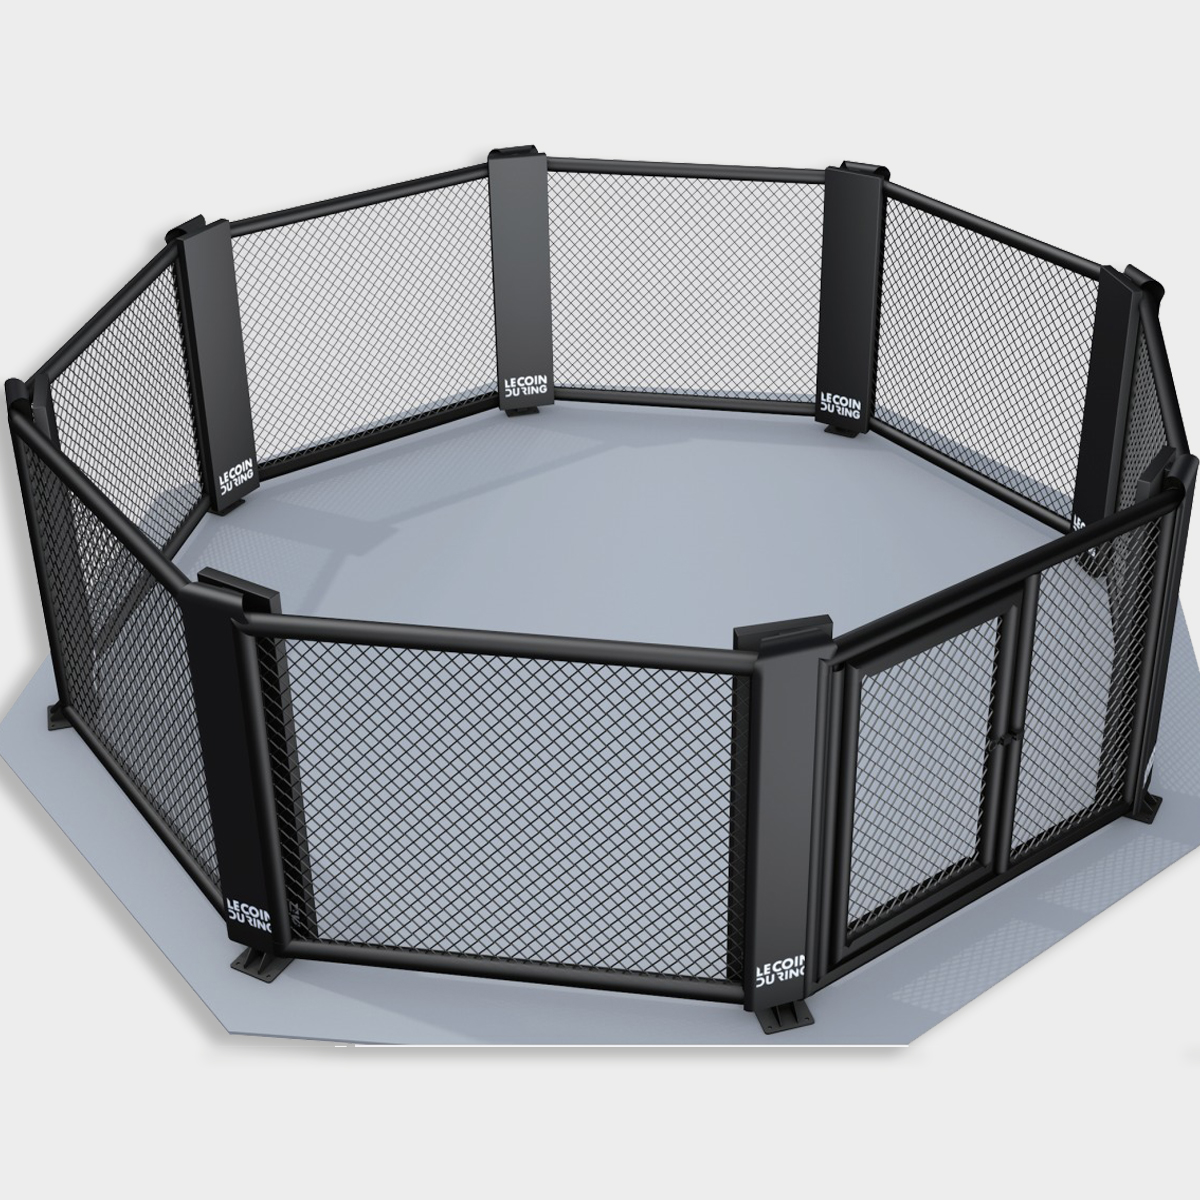 Cage de MMA - training